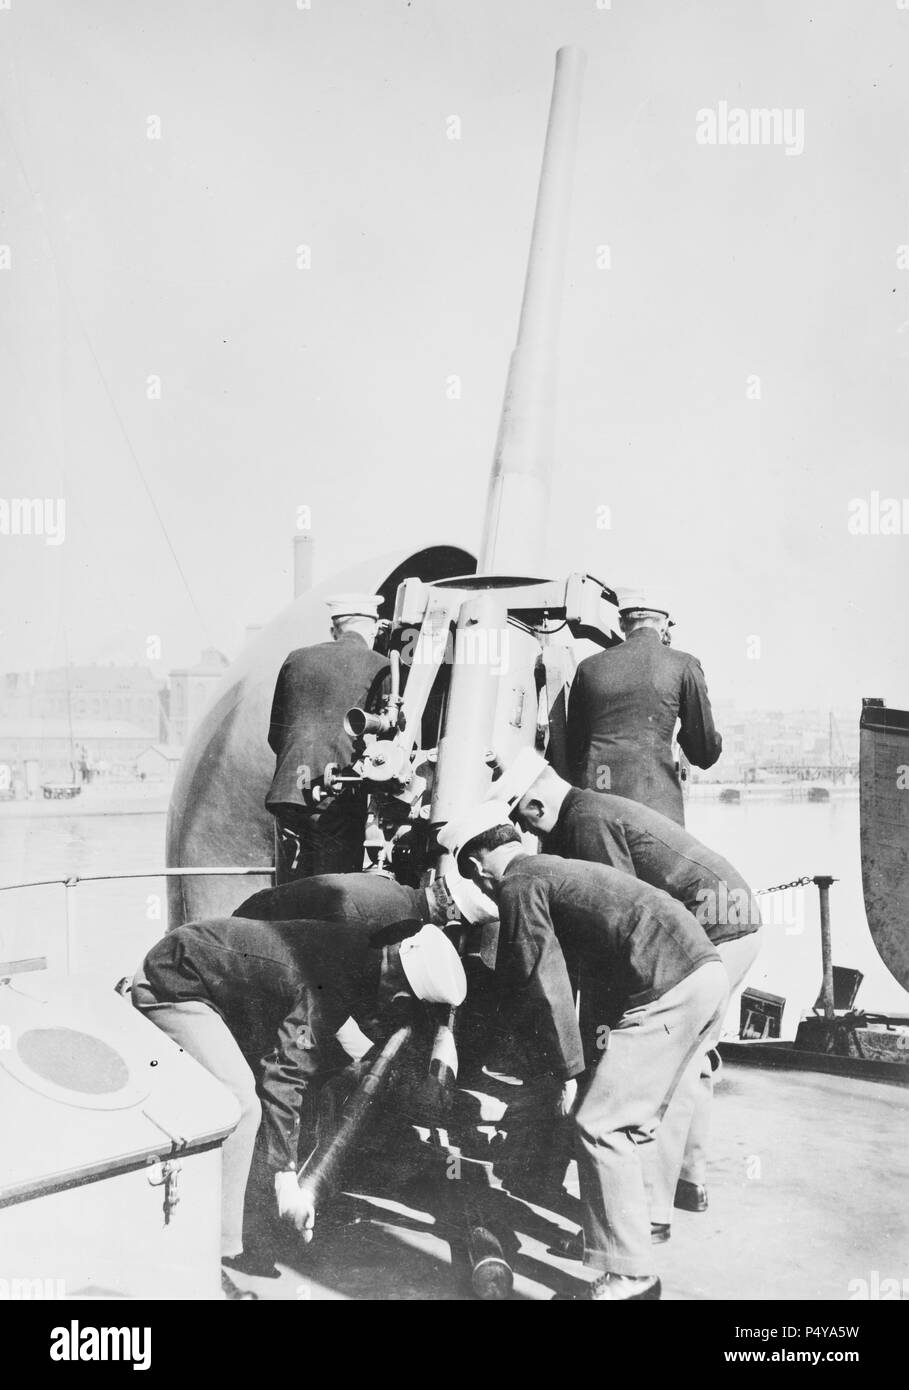 Photograph shows U.S. Marines using an antiaircraft gun during World War I. Stock Photo